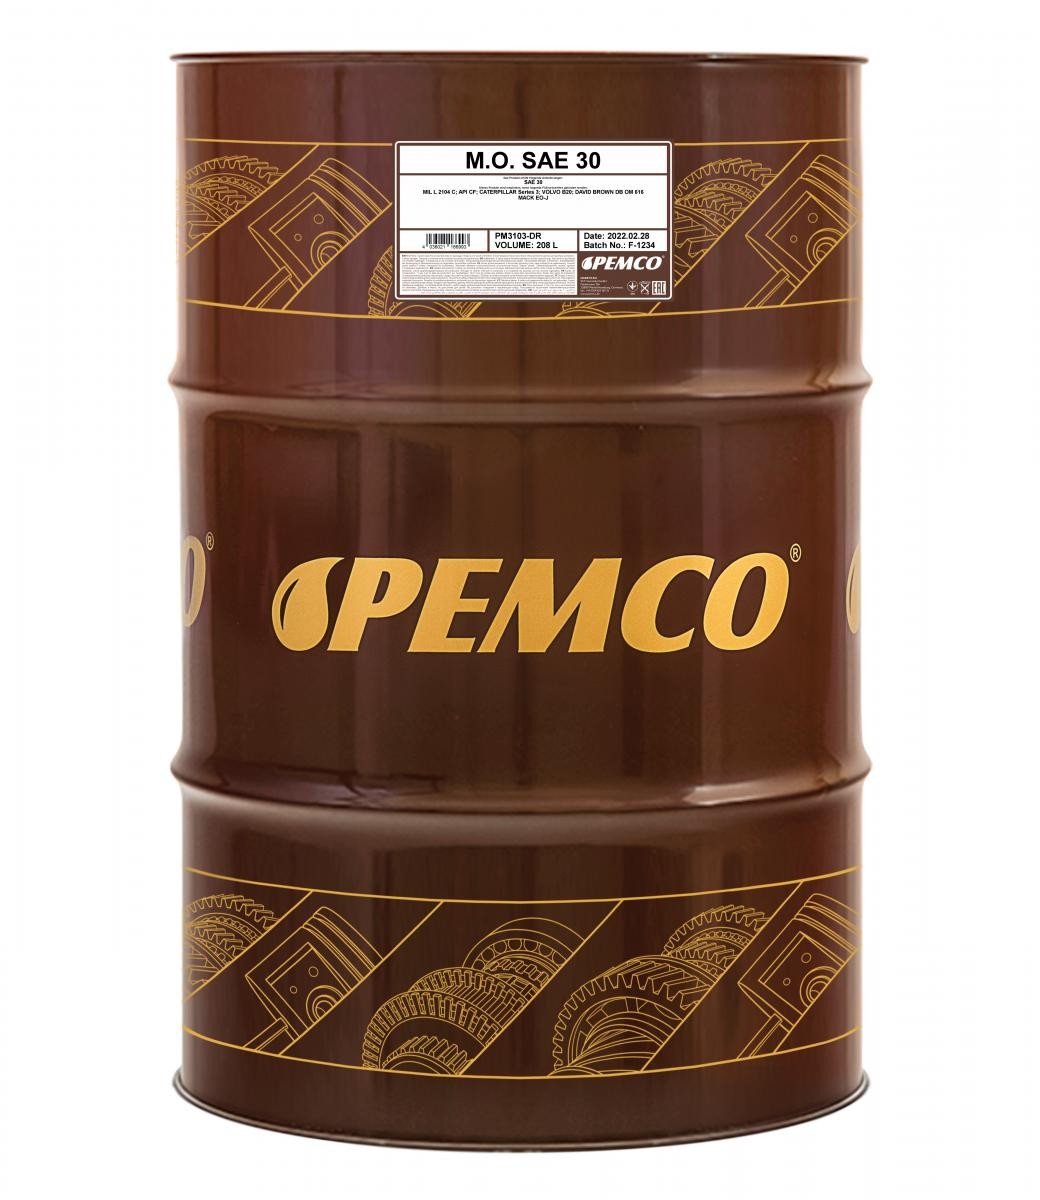 olio SAE30 diesel - PM3103-DR PEMCO M.O. SAE 30